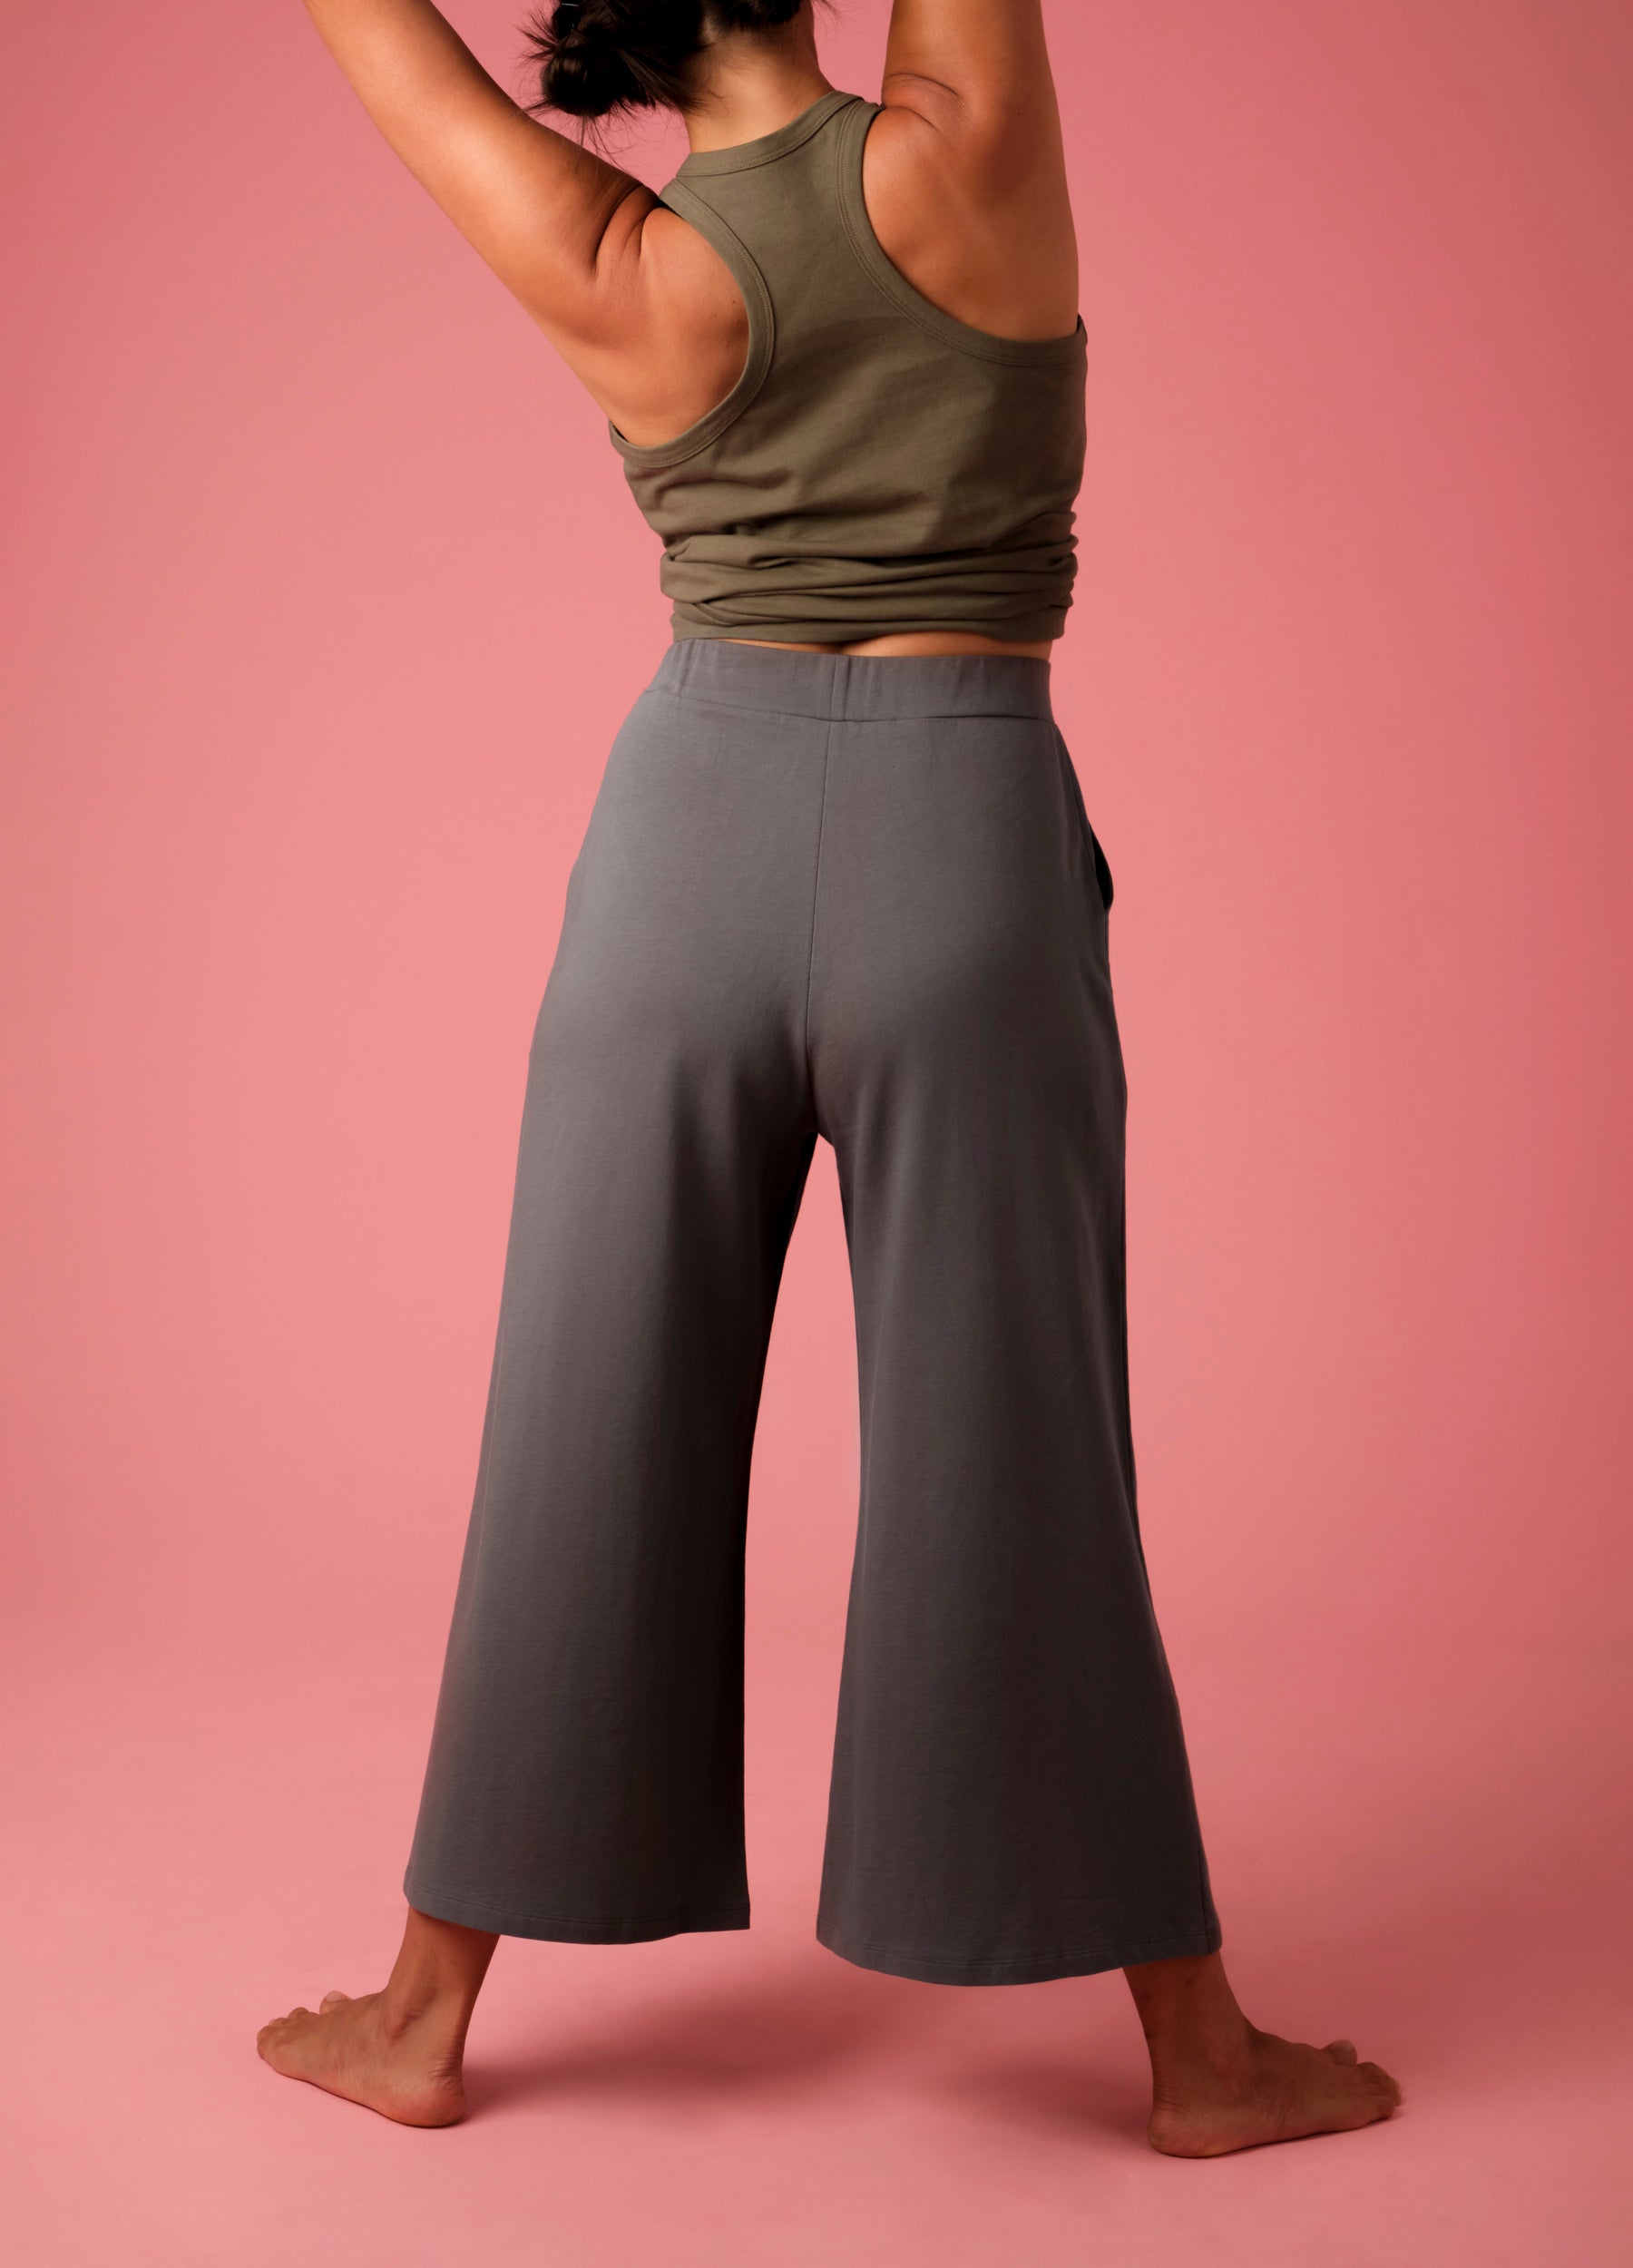 Women's Perfect Fit Pants, Five-Pocket Slim-Leg | Pants & Jeans at L.L.Bean